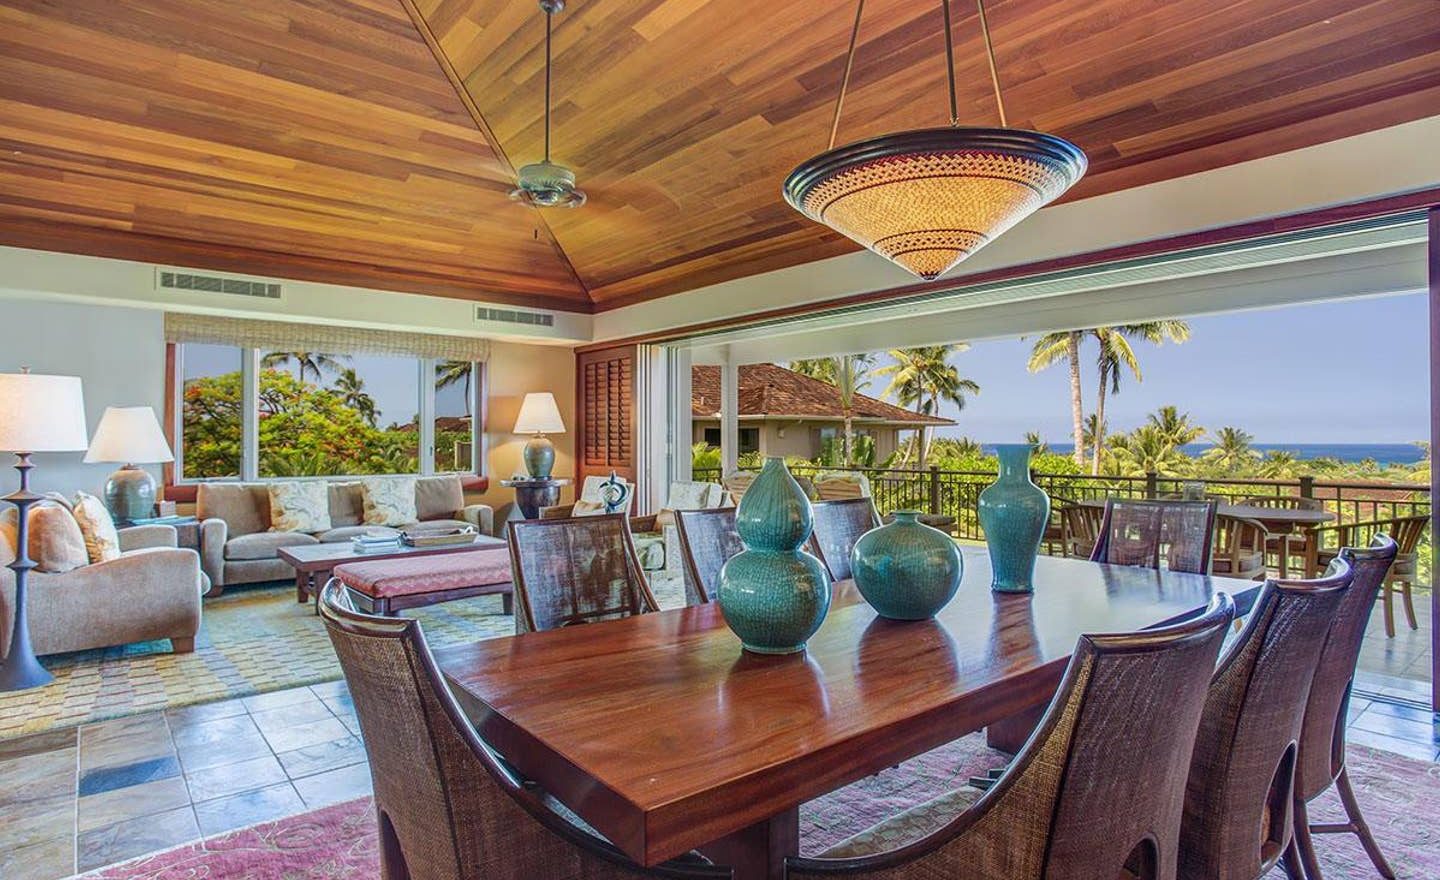 Ke Alaula 210A - Dining area with view of ocean - Hawaii Vacation Home